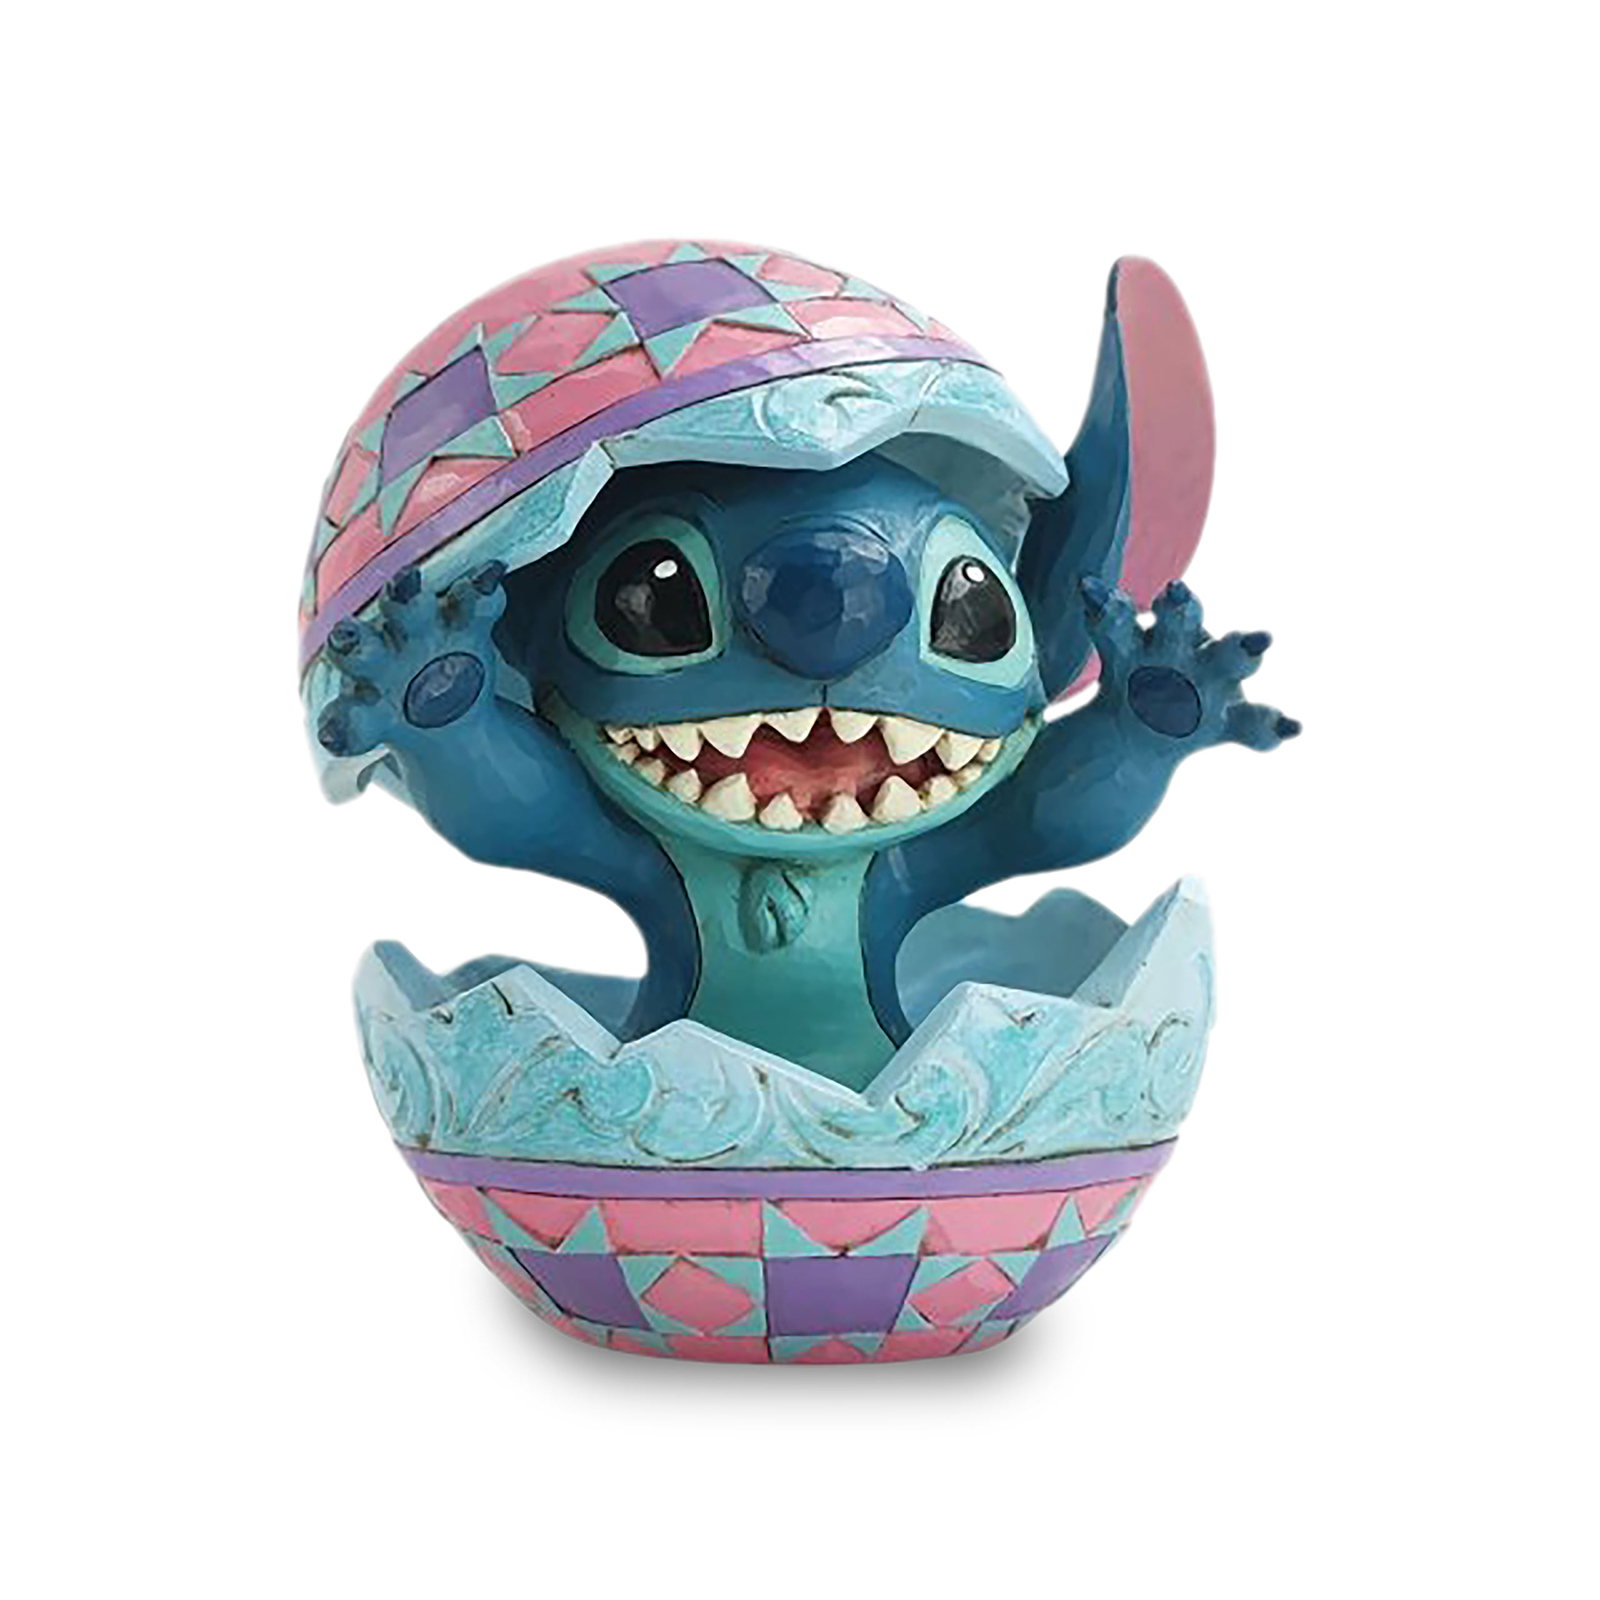 Stitch in Easter Egg Figure - Lilo & Stitch